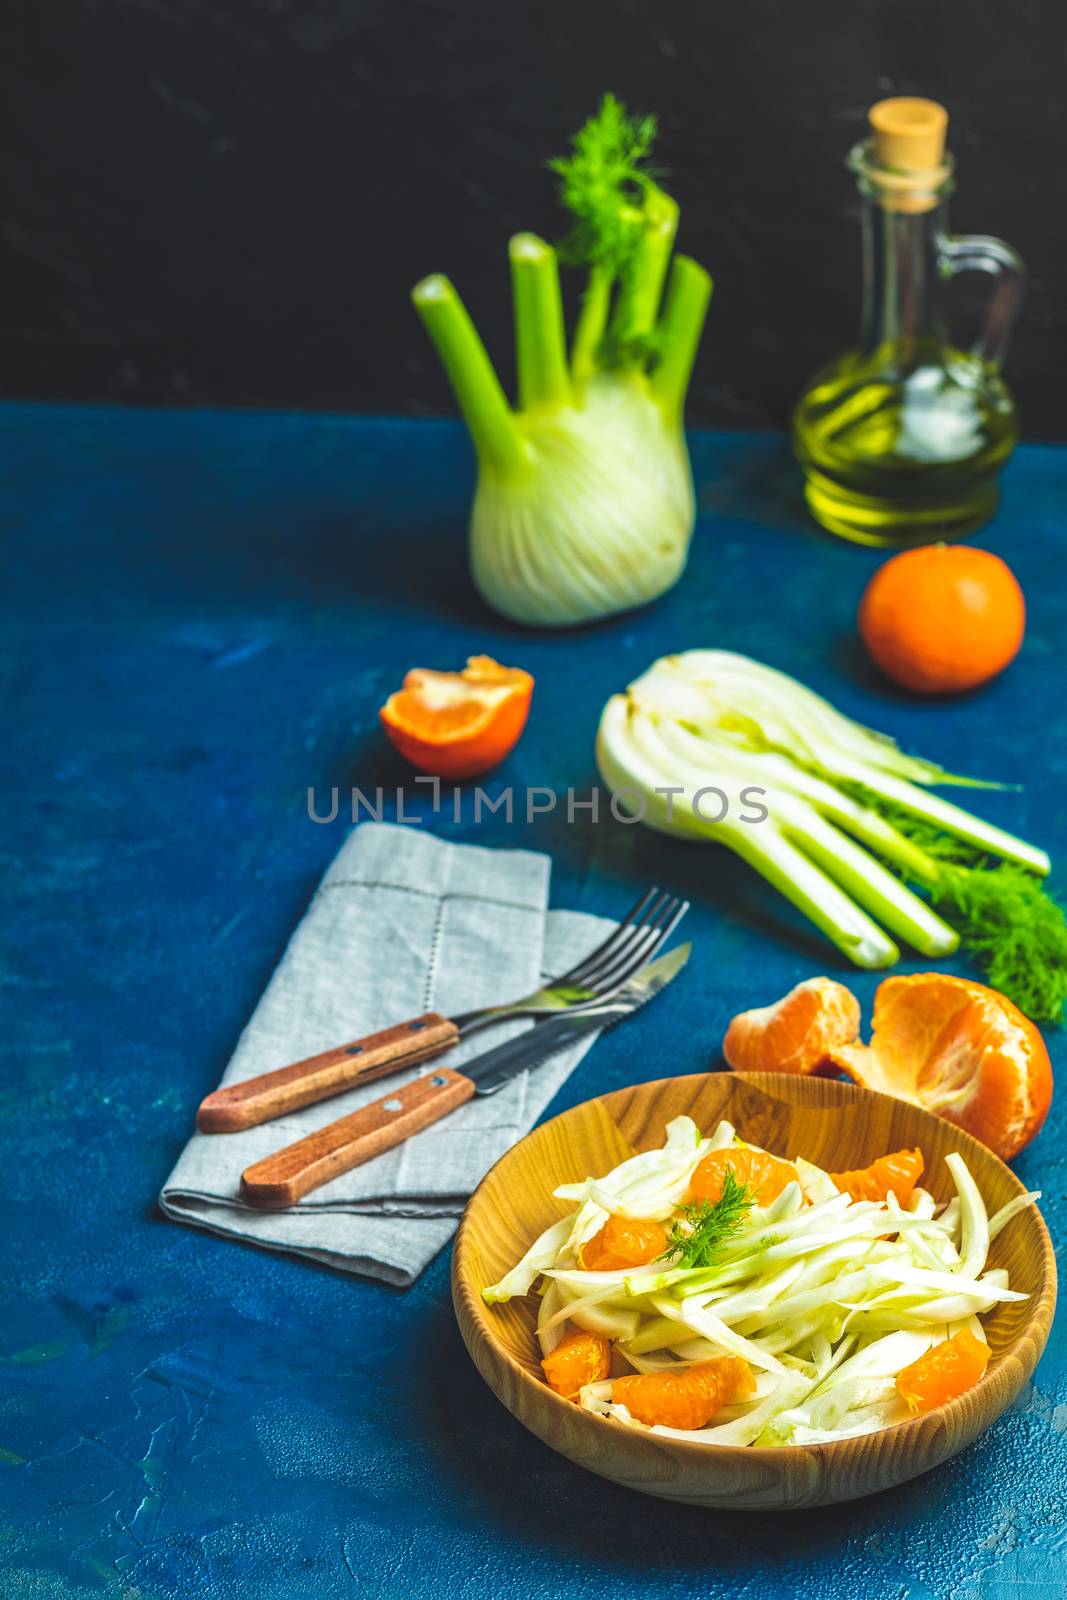 Fennel and orange citrus salad on wooden plate between ingredien by ArtSvitlyna